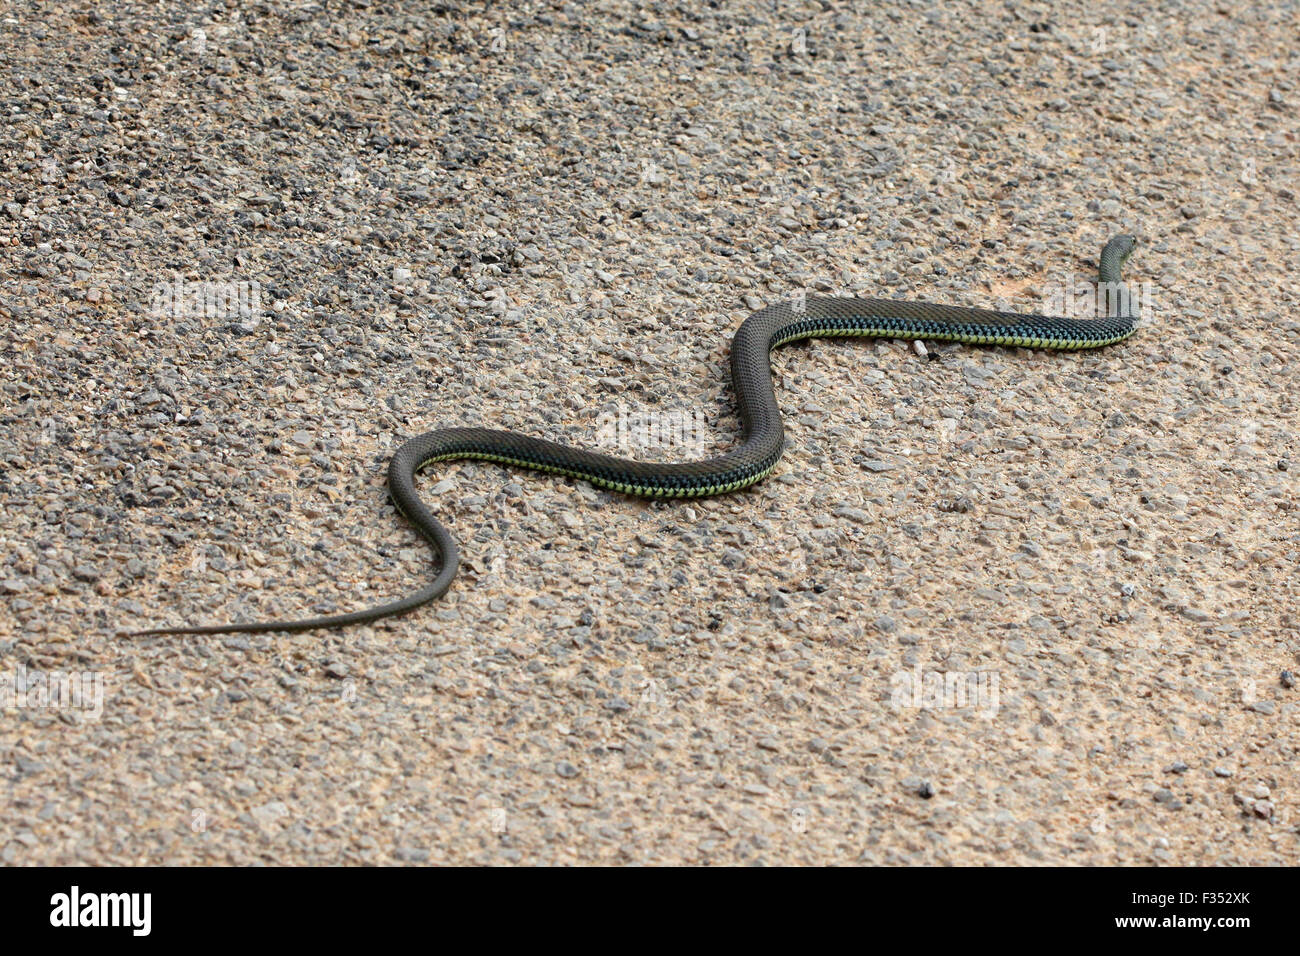 Malpolon monspessulanus snake. Stock Photo